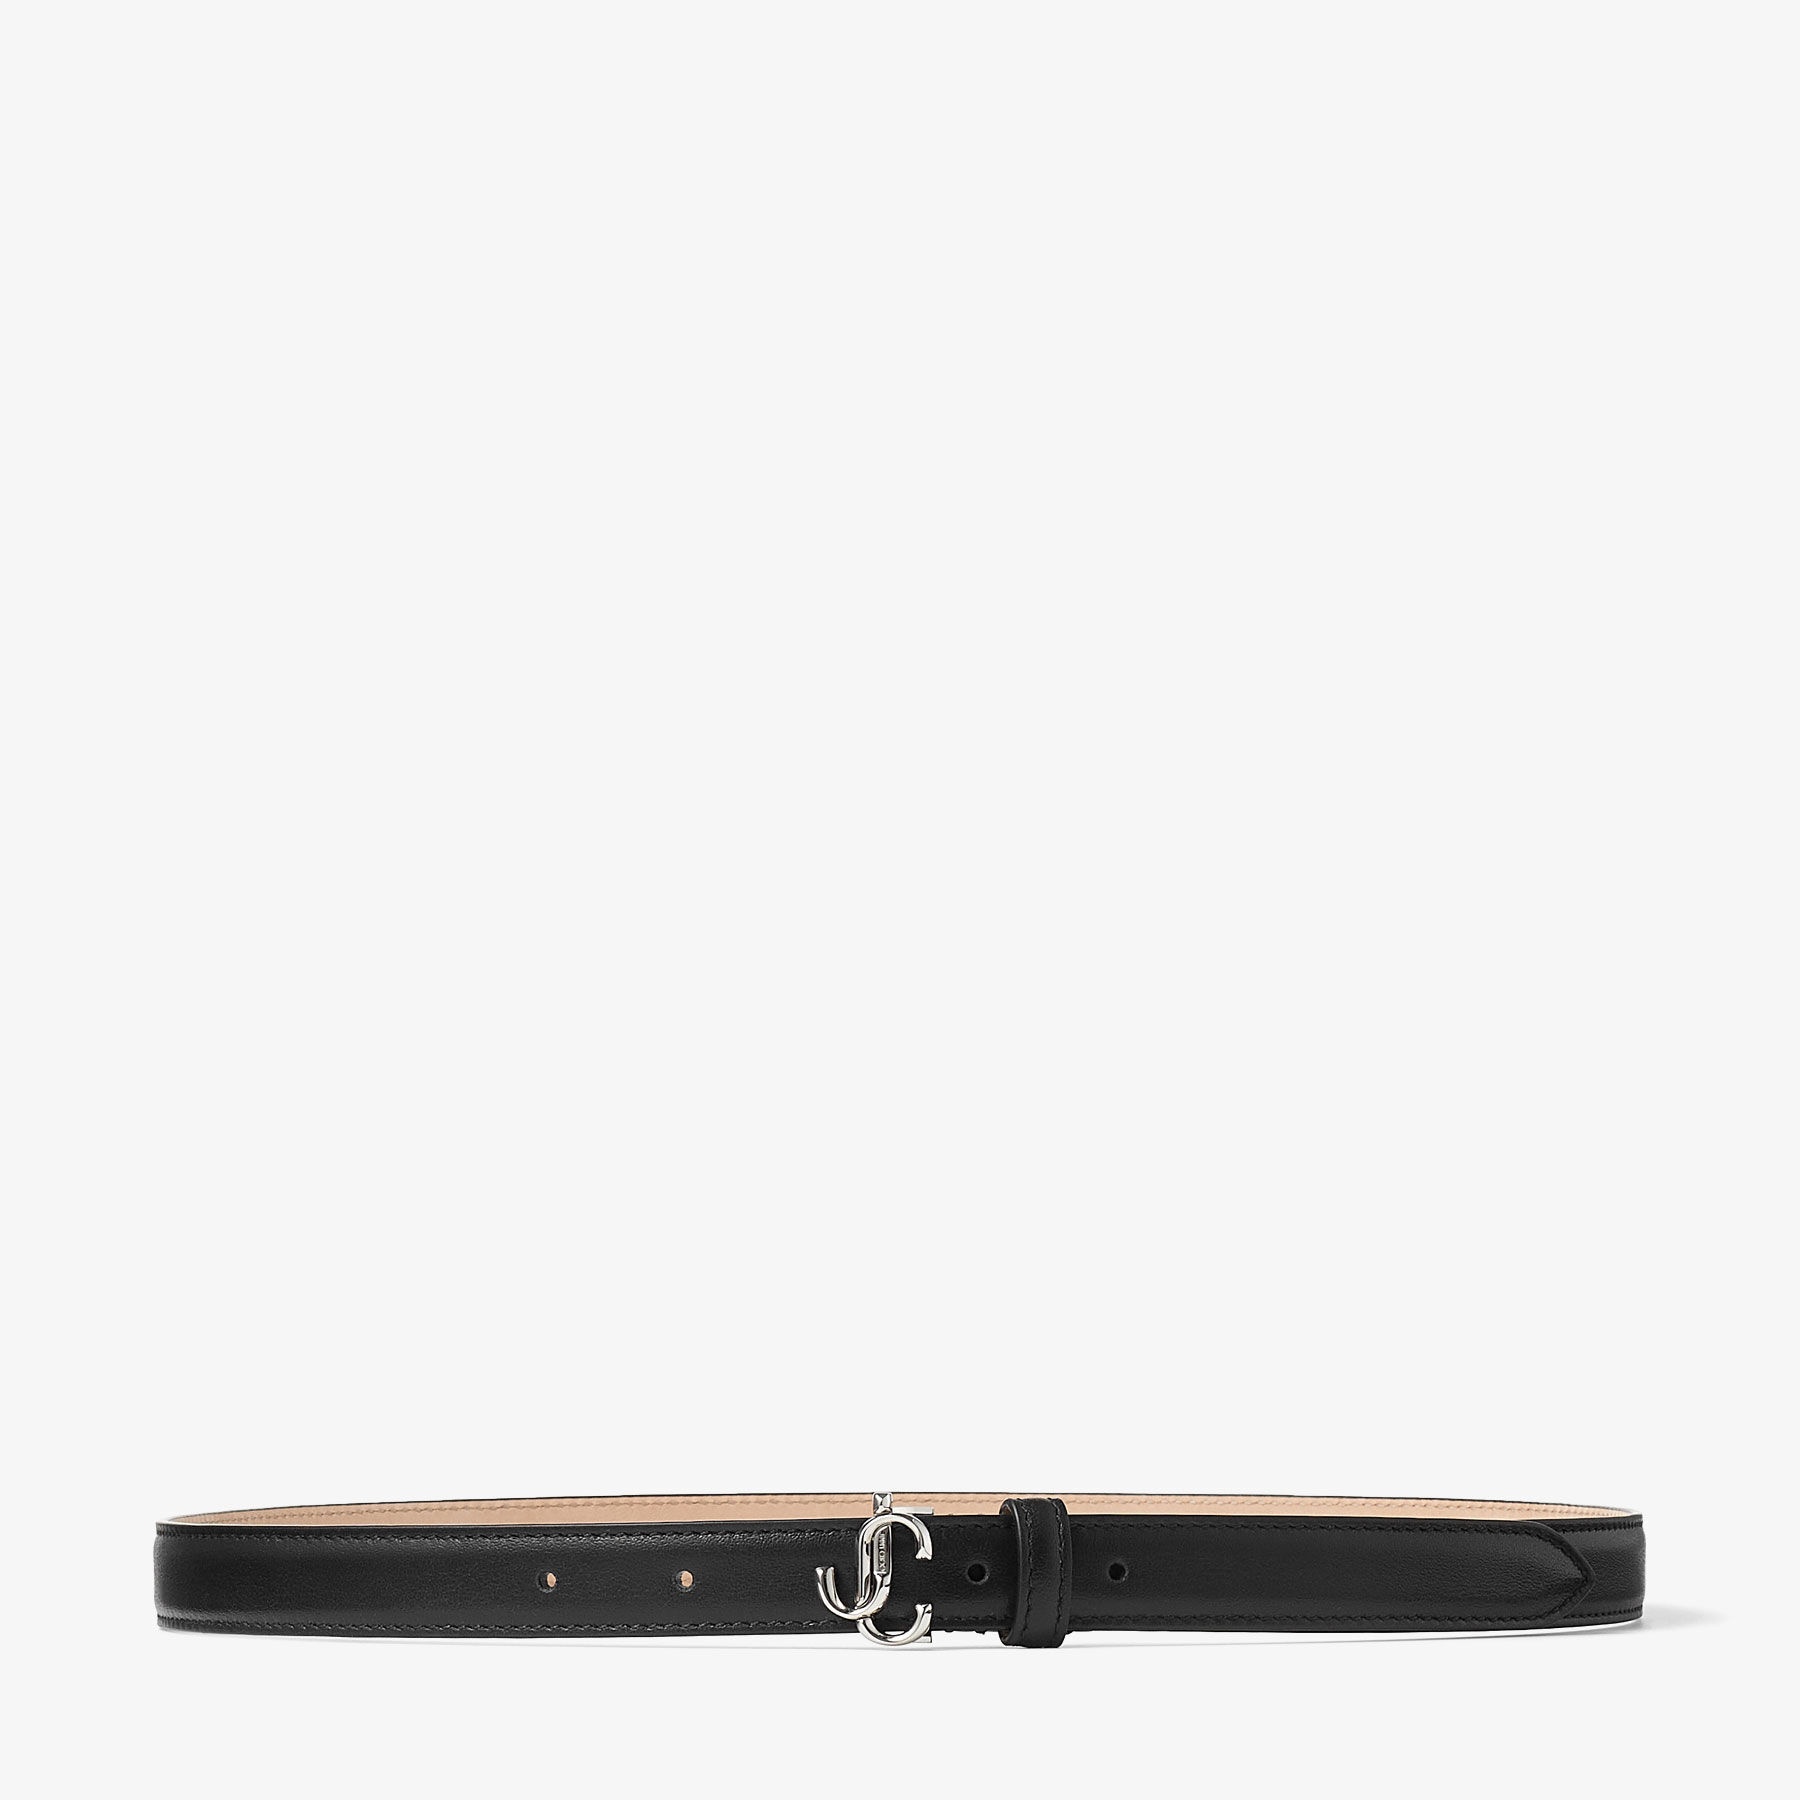 Mini Helina
Black Smooth Leather Mini Belt - 1